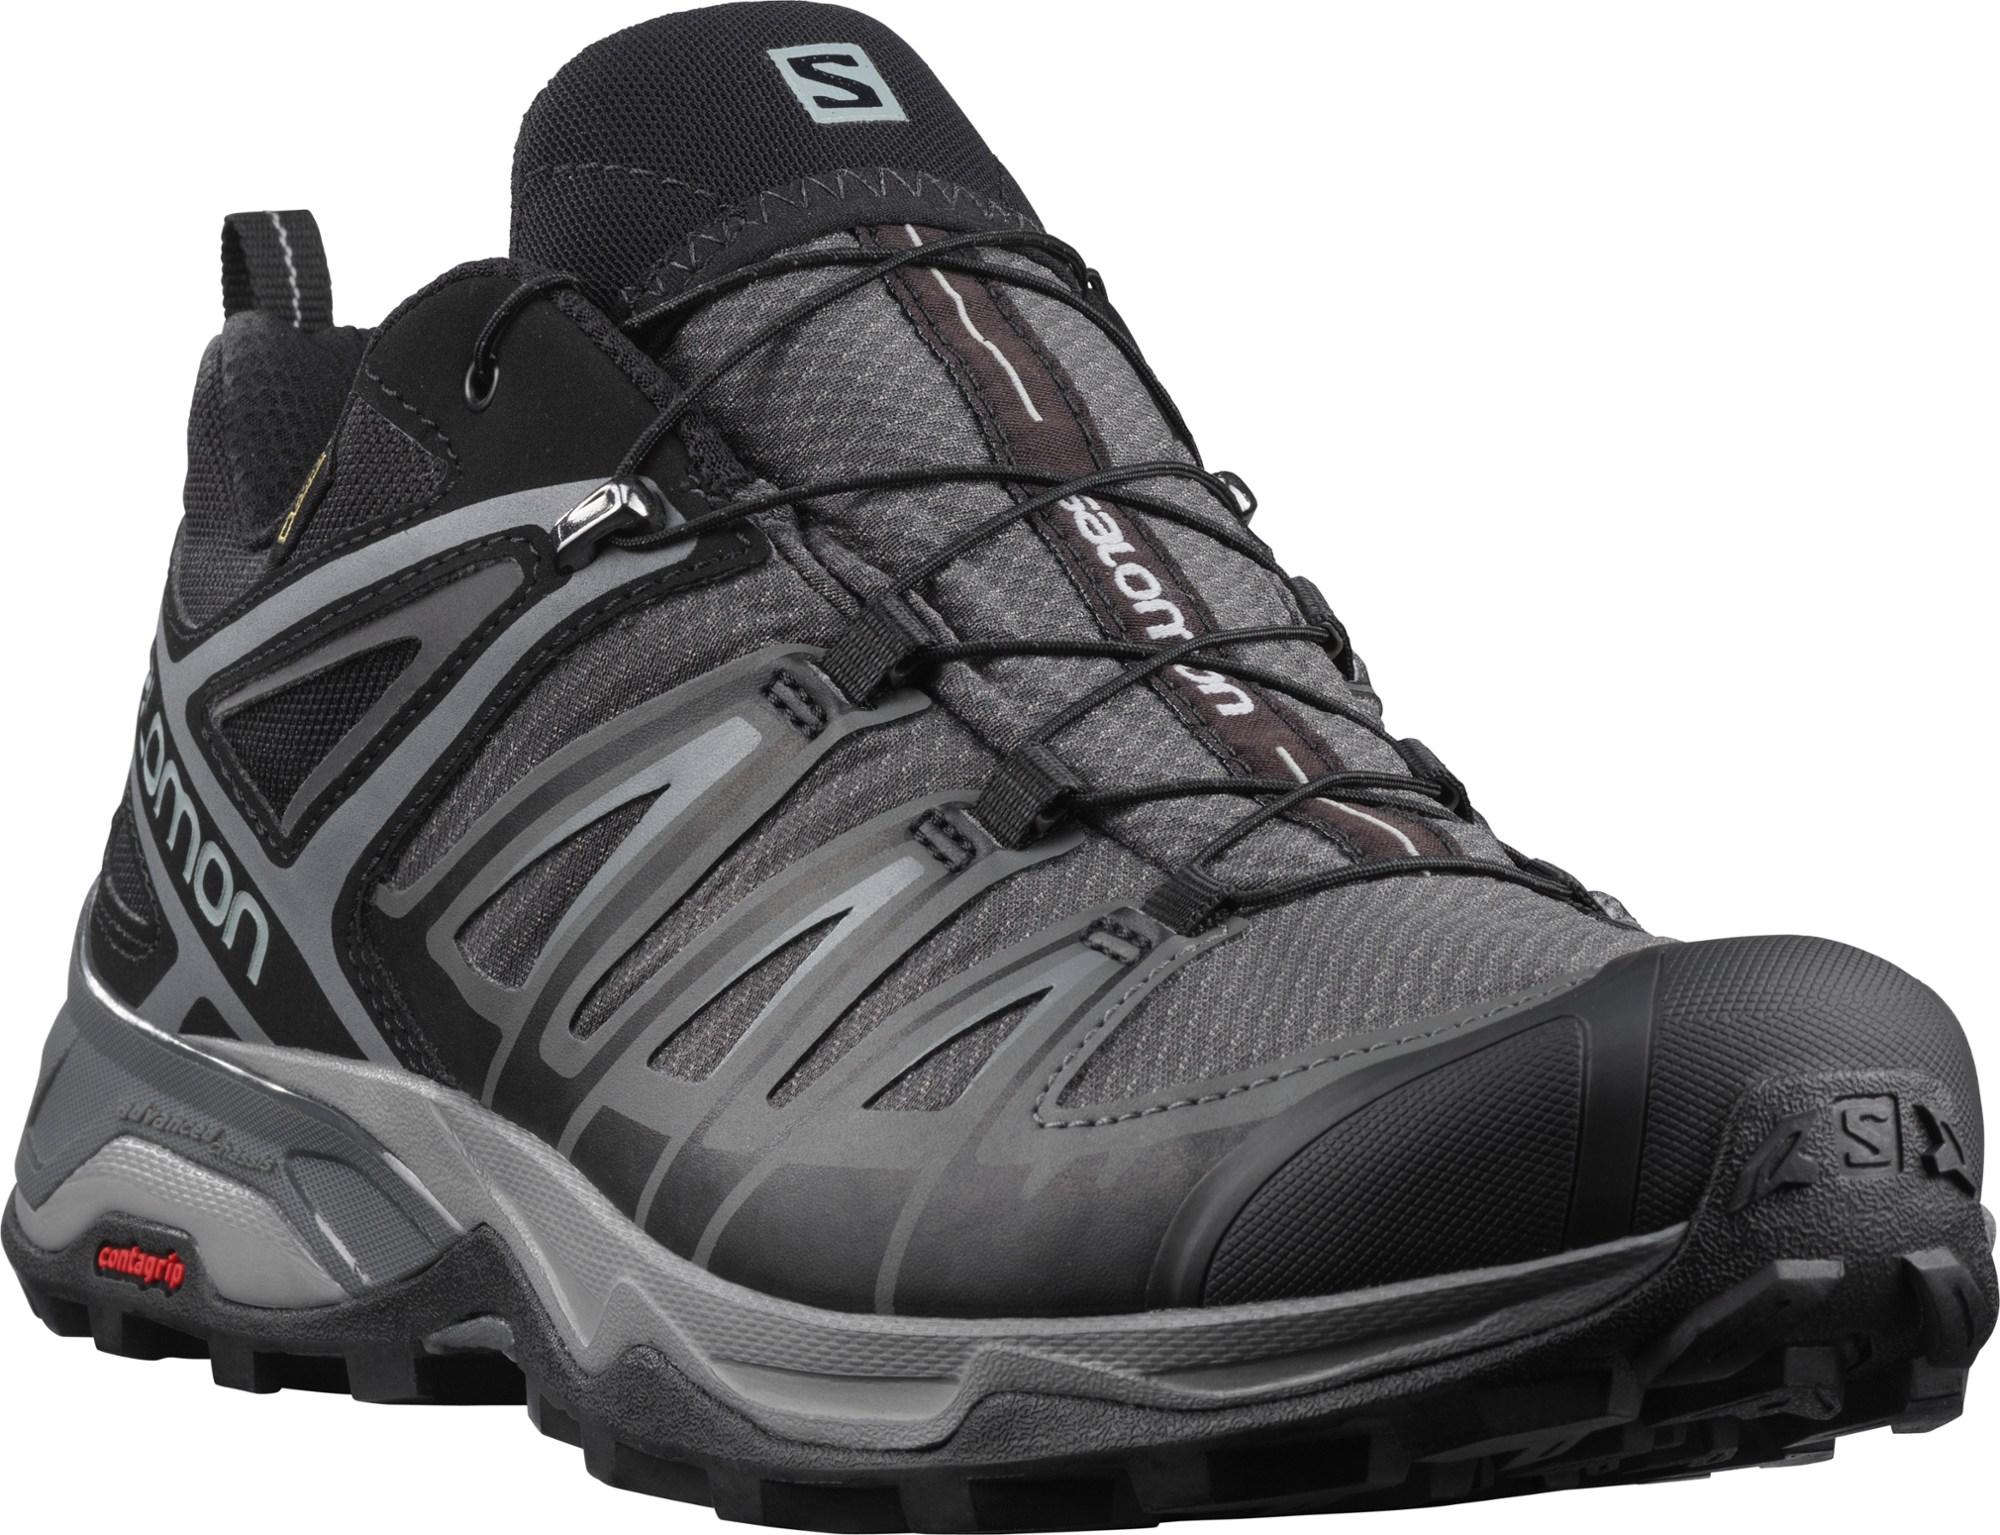 Salomon X Ultra 3 Low GTX Hiking Shoes for $111.93 Shipped